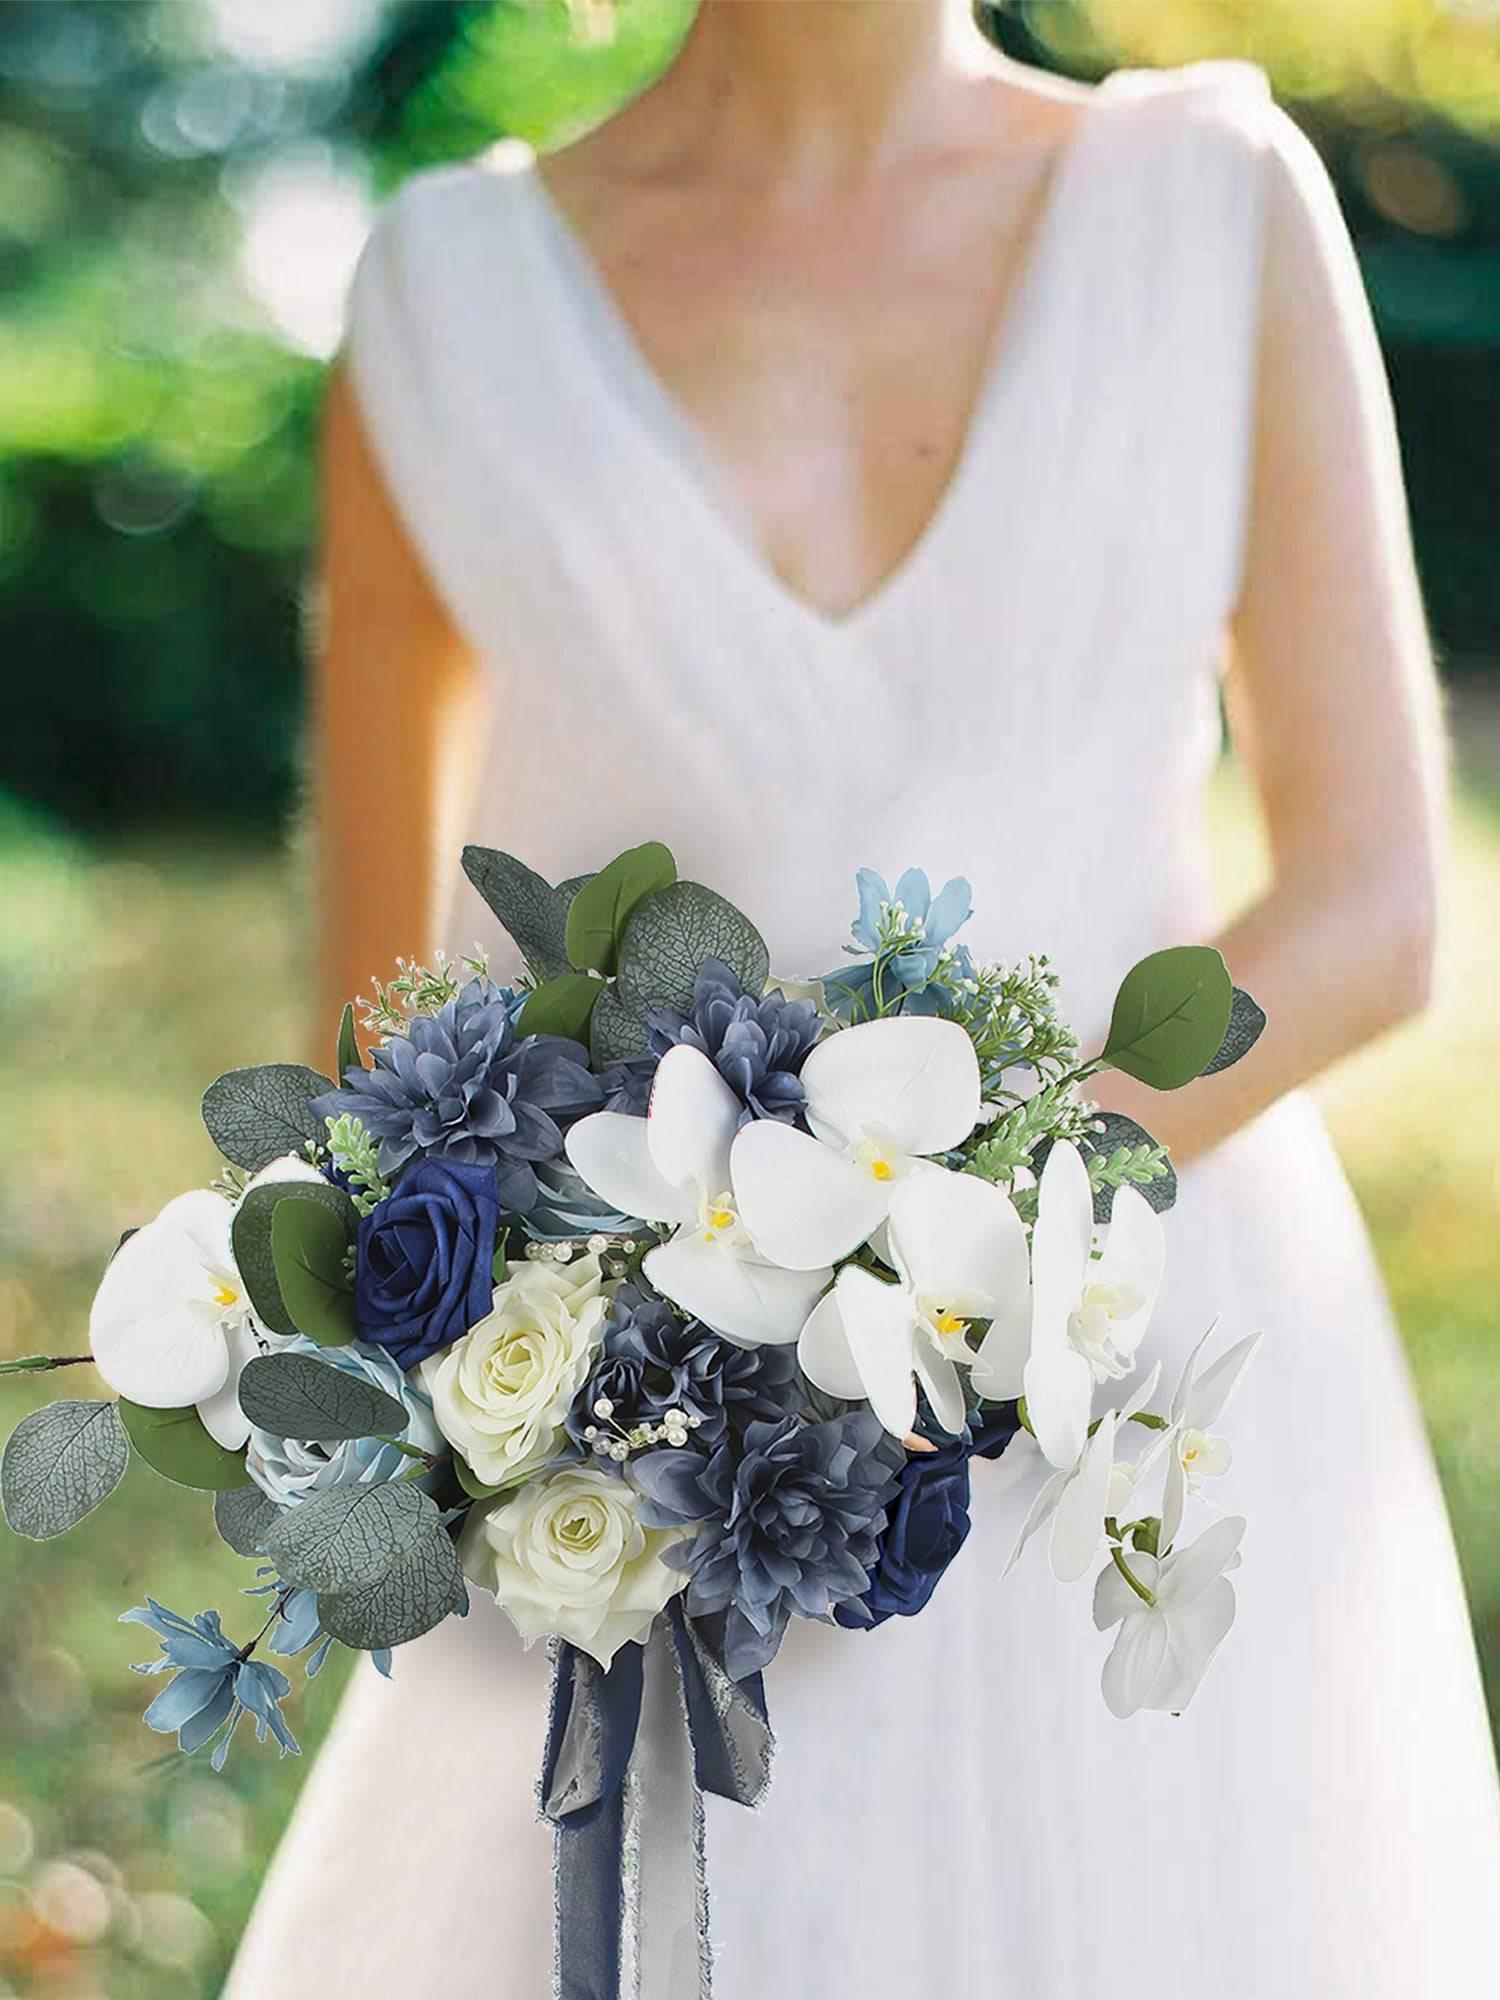 13.5 inch wide Navy Blue Bridal Bouquet - Rinlong Flower